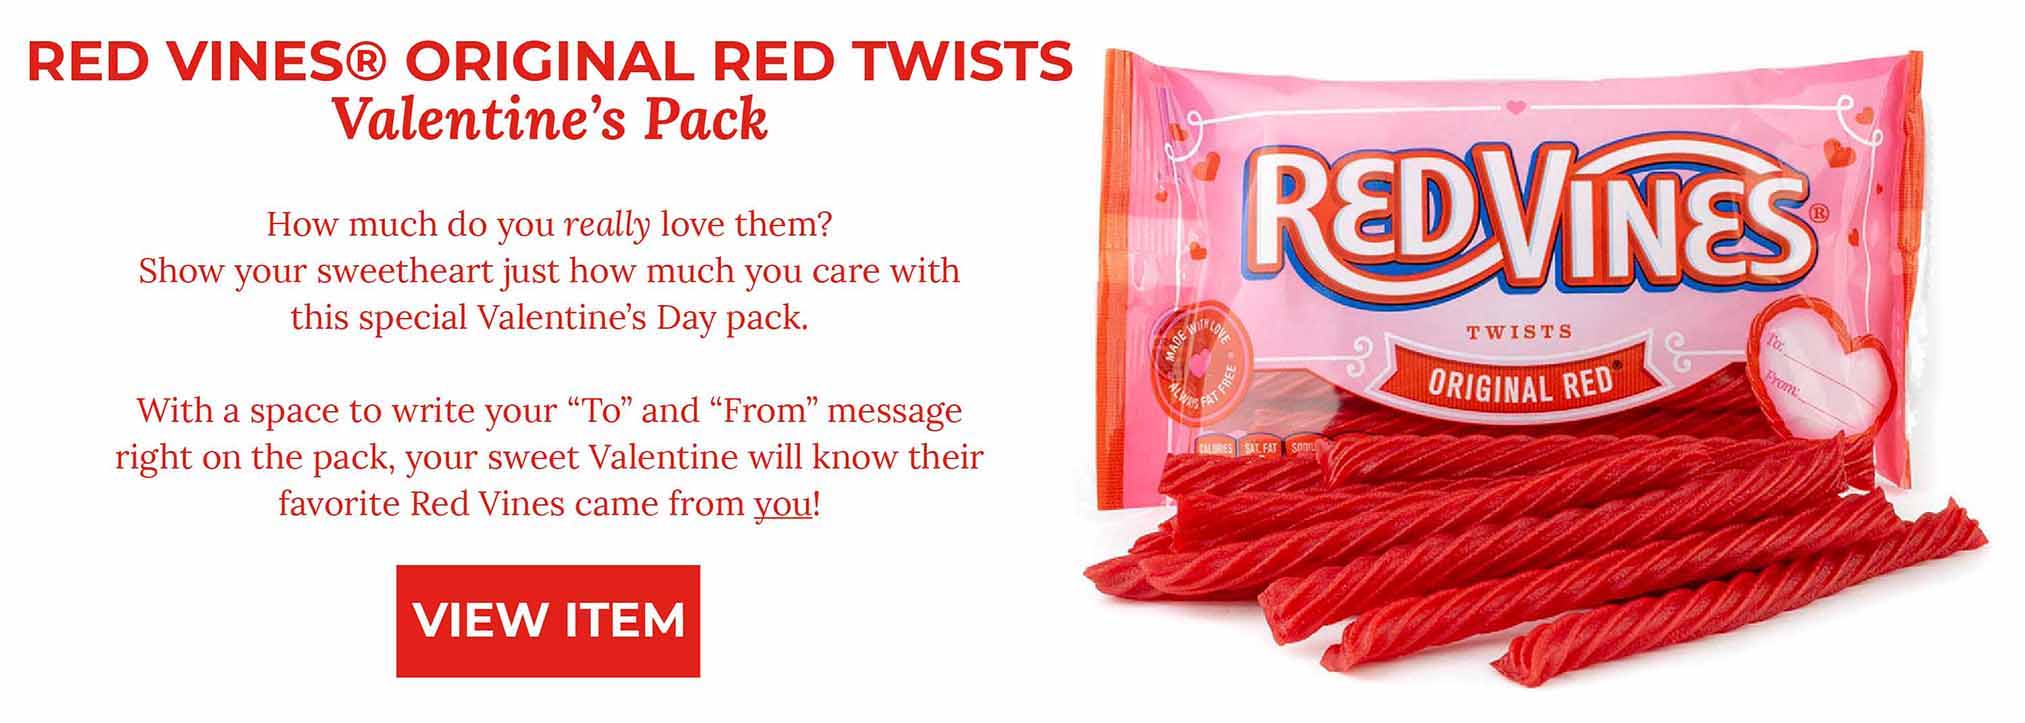 Red Vines Original Red Twists Valentine's Pack - VIEW ITEM